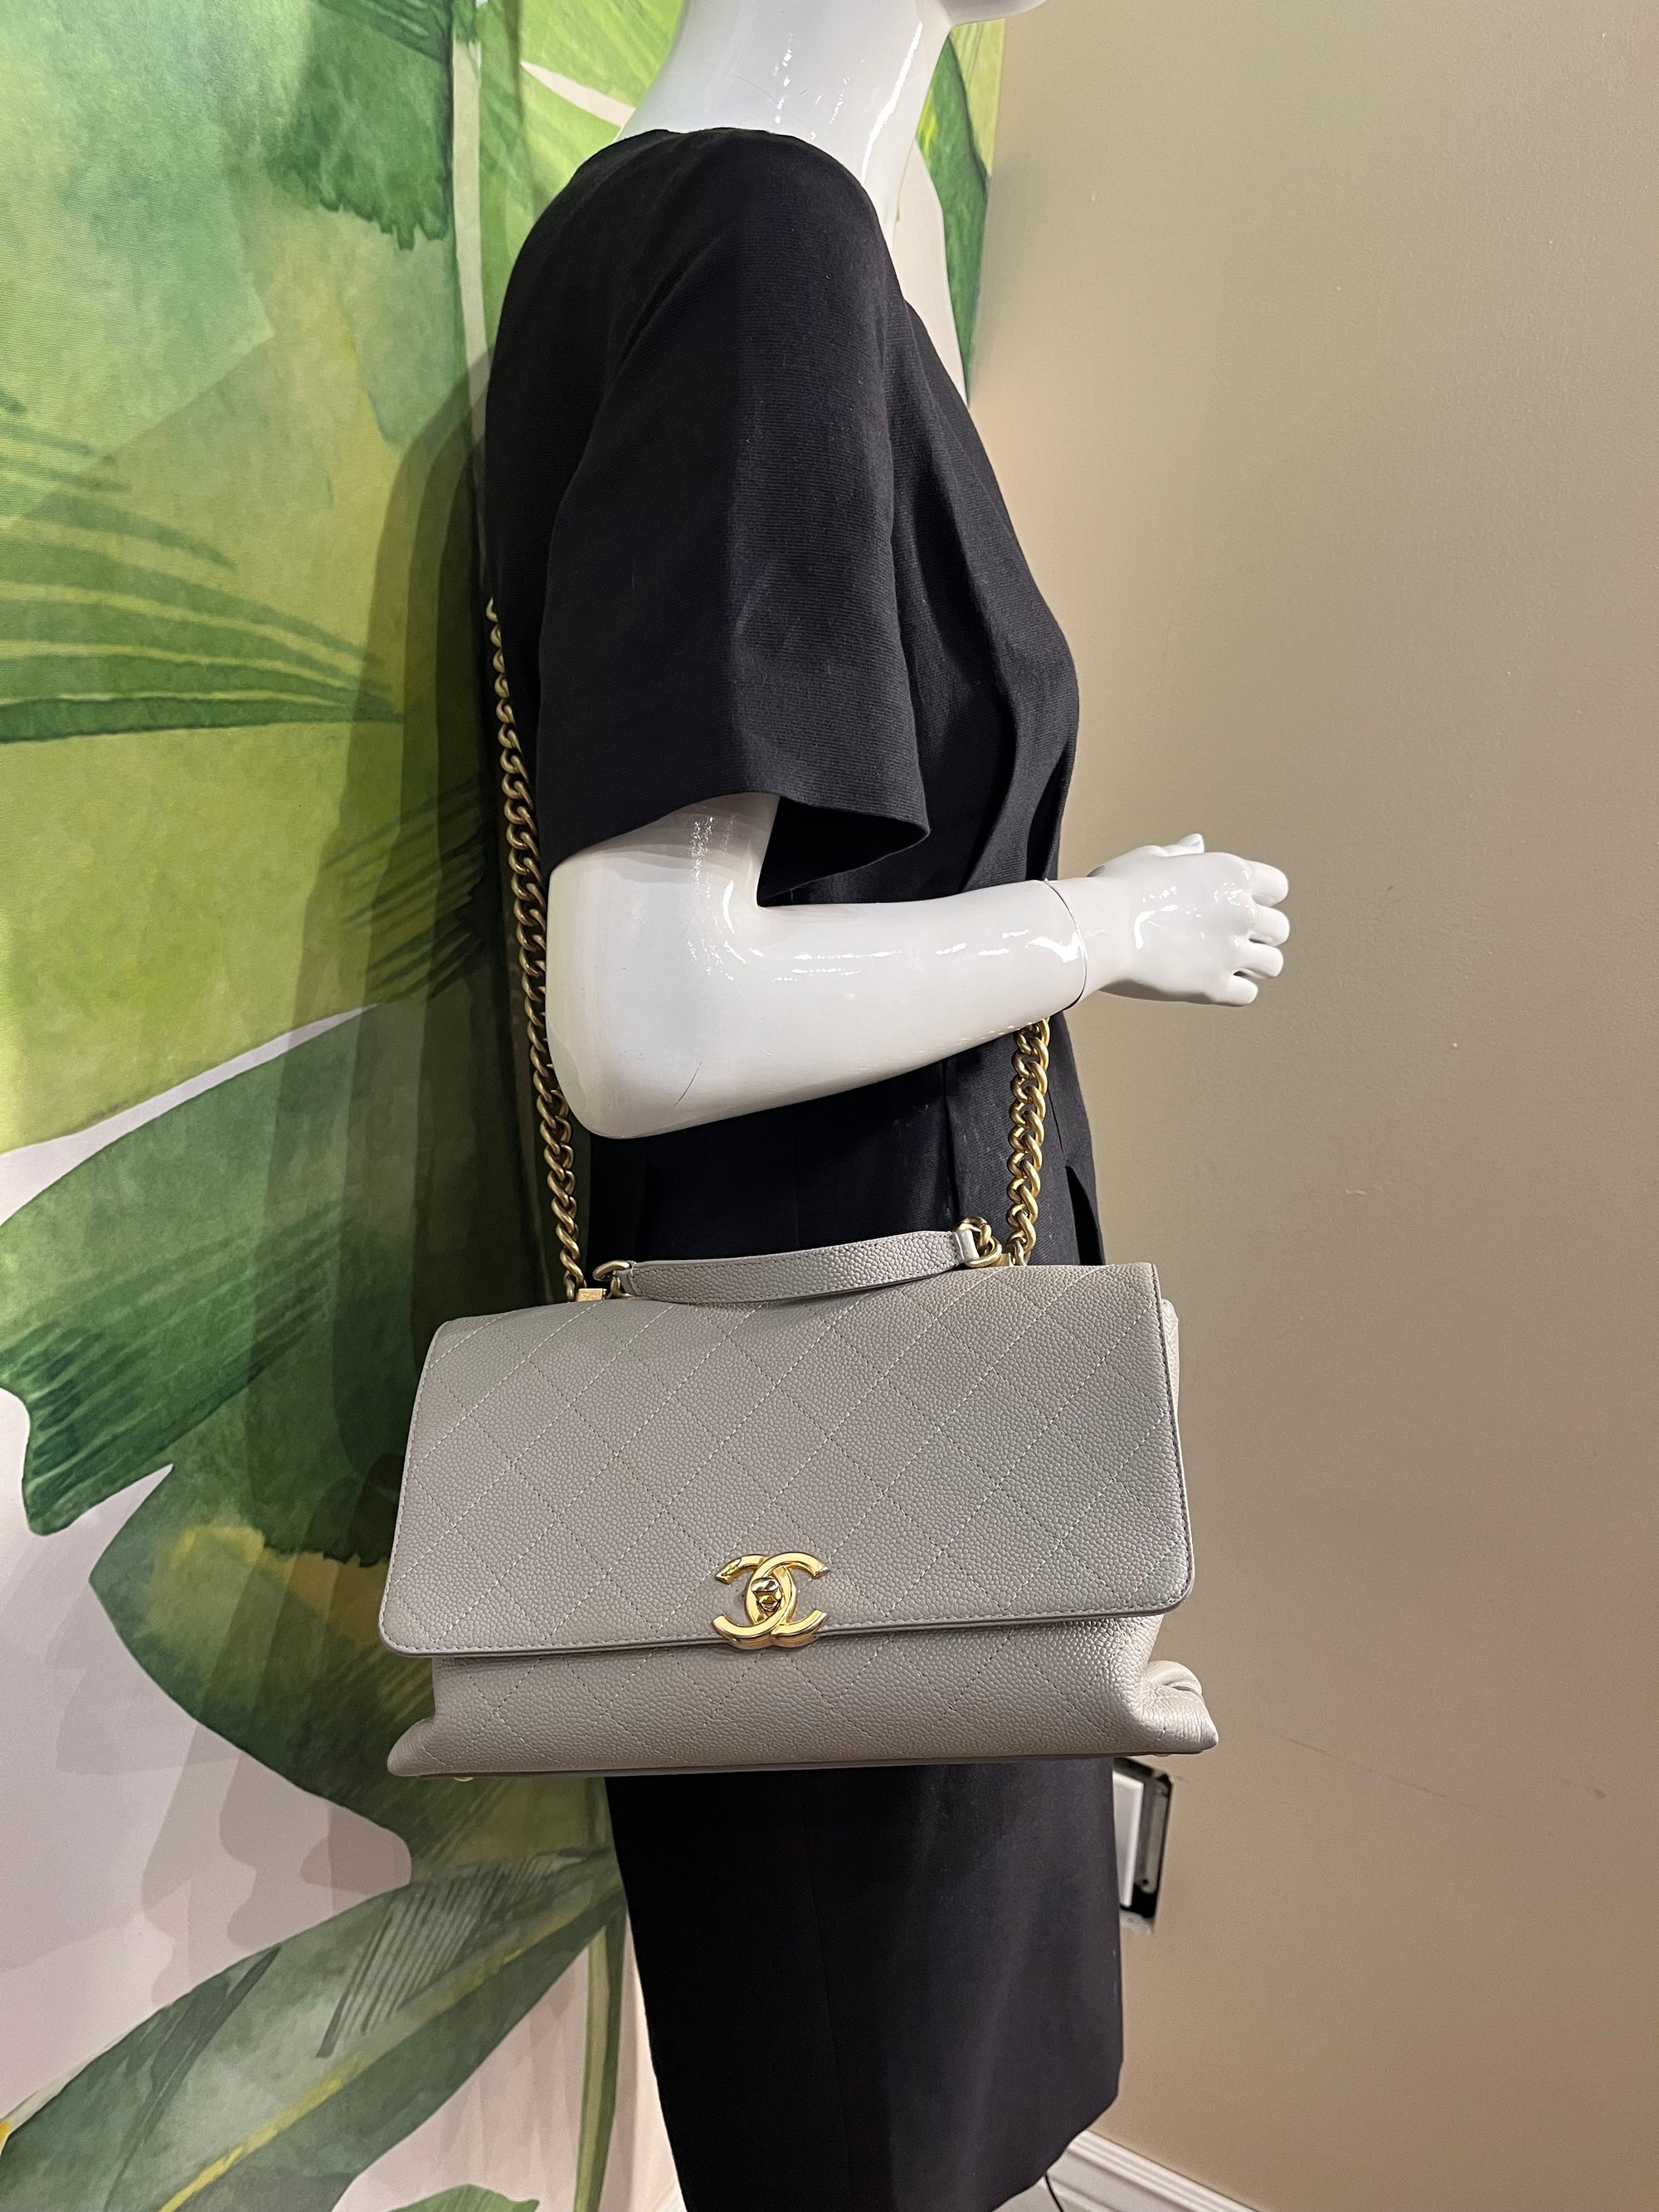 Chanel Grey Chic Affinity Flap Bag